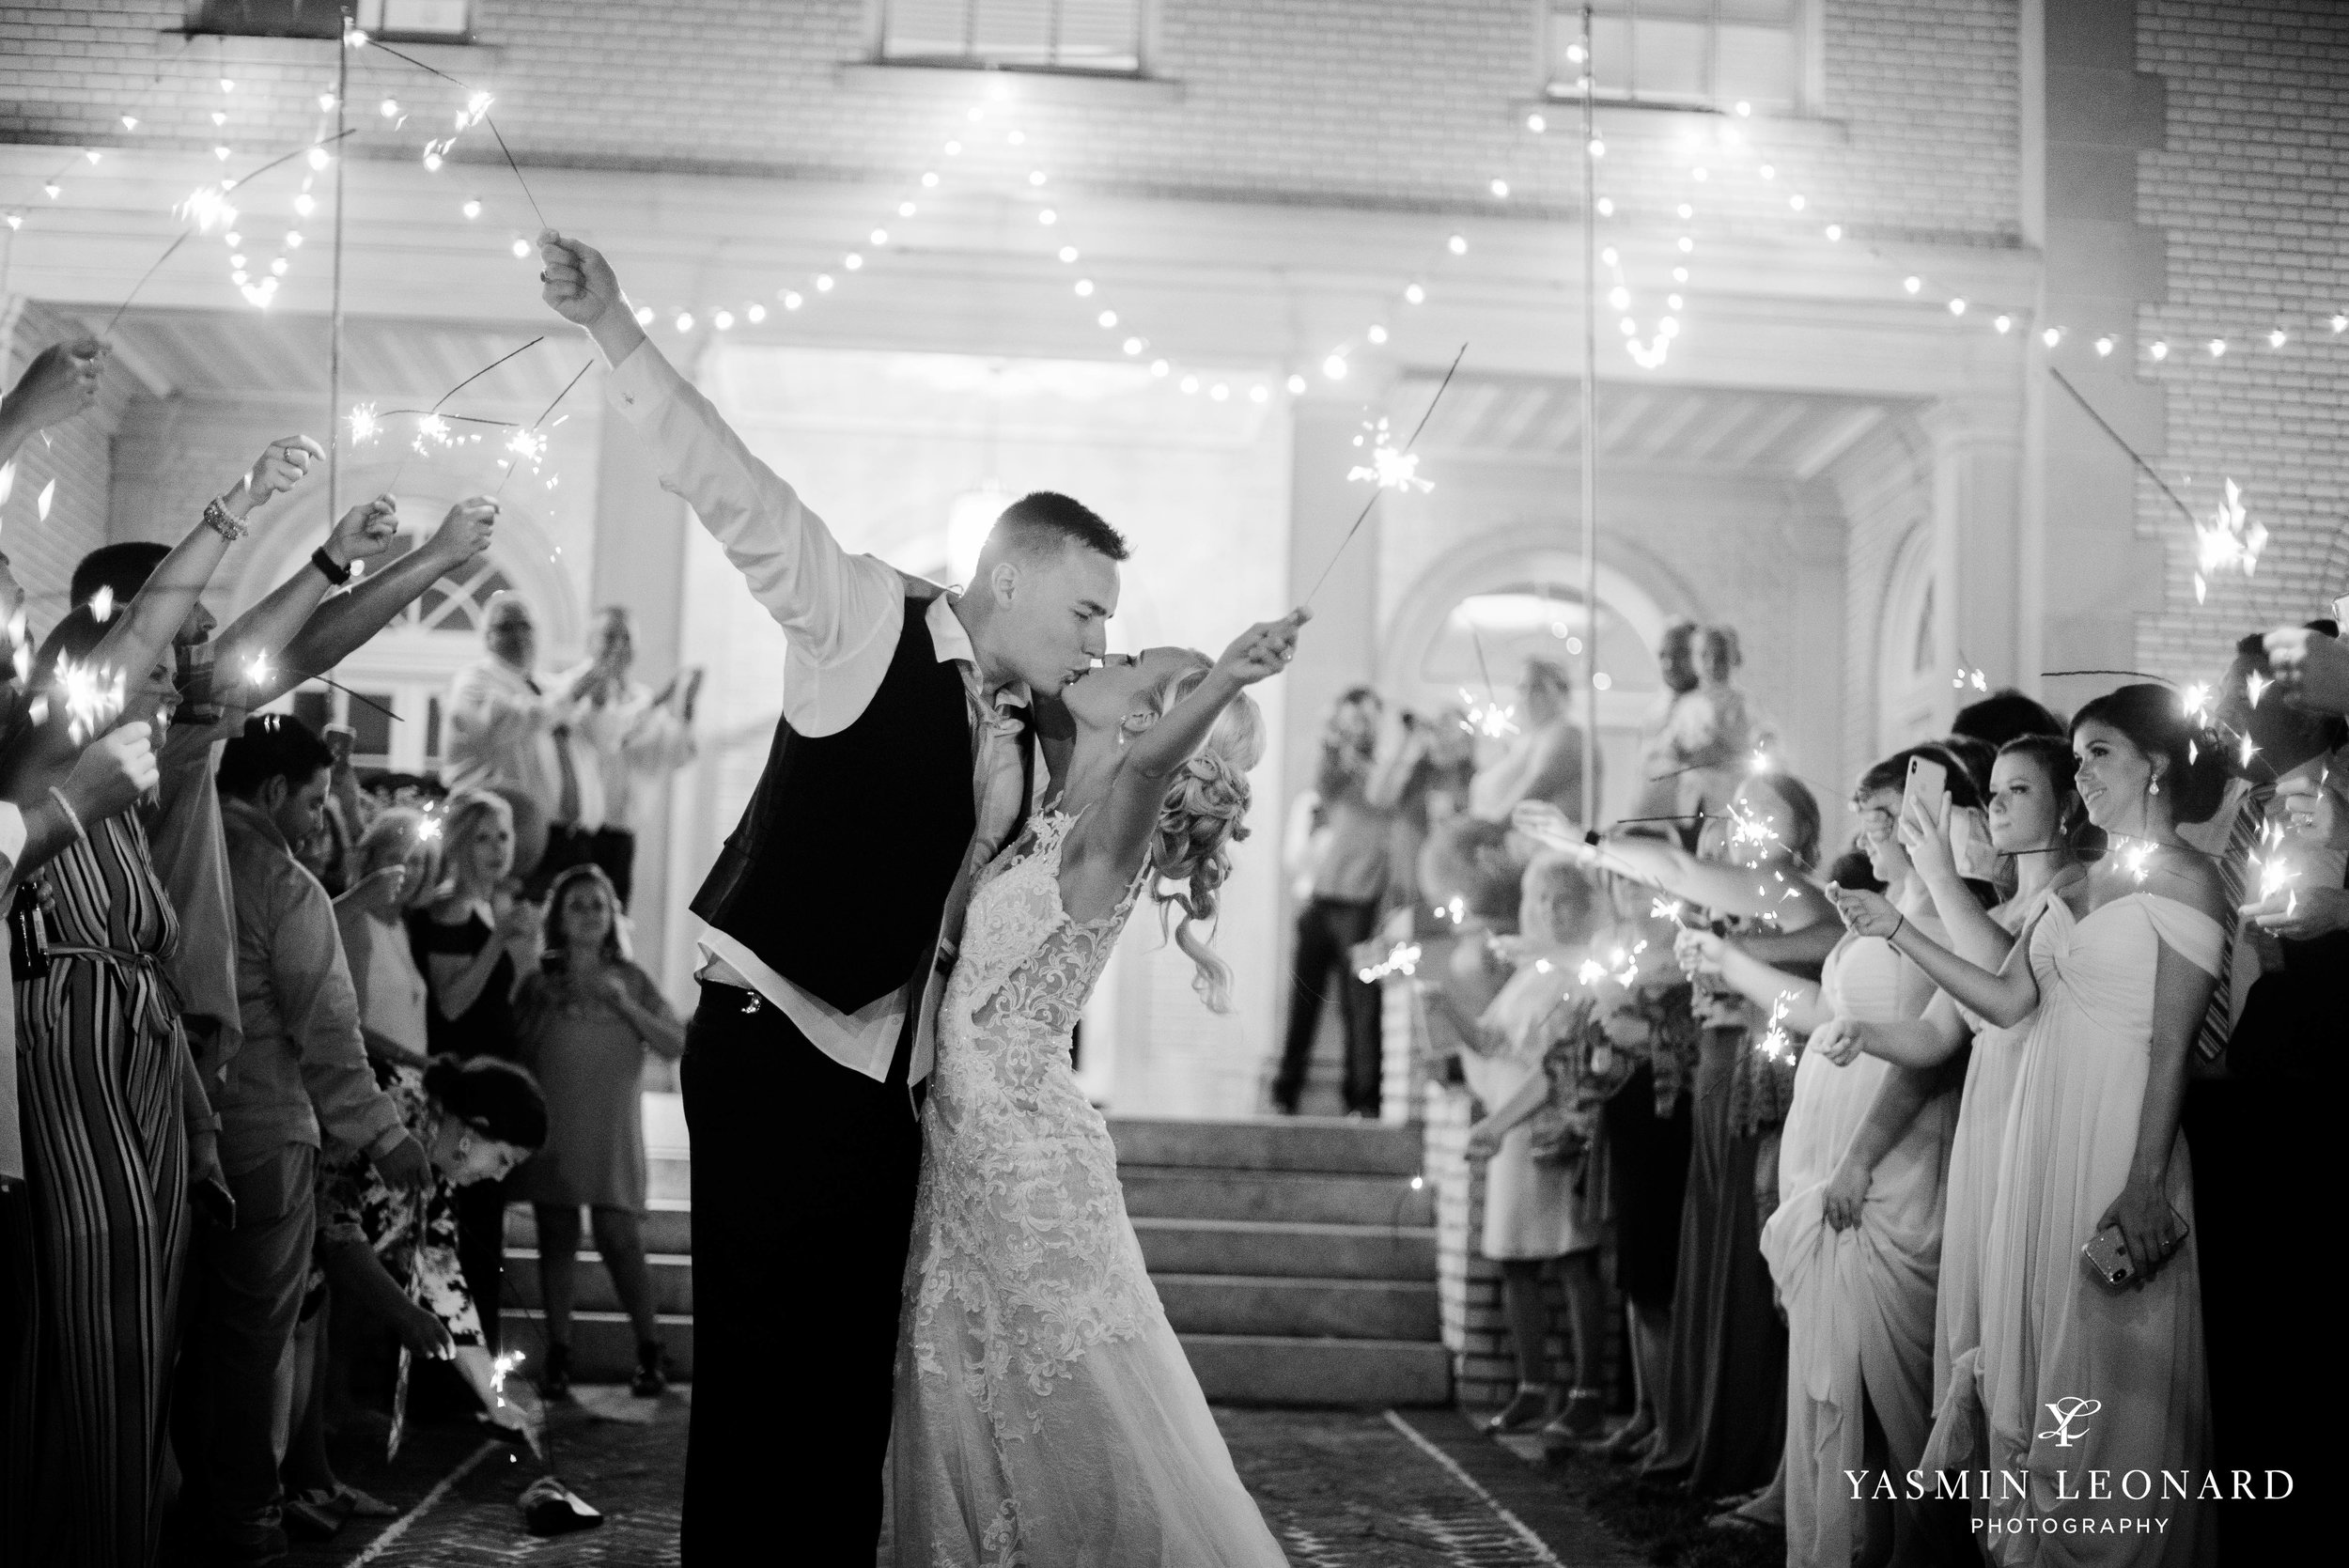 Separk Mansion - NC Weddings - Gastonia Wedding - NC Wedding Venues - Pink and Blue Wedding Ideas - Pink Bridesmaid Dresses - Yasmin Leonard Photography-74.jpg